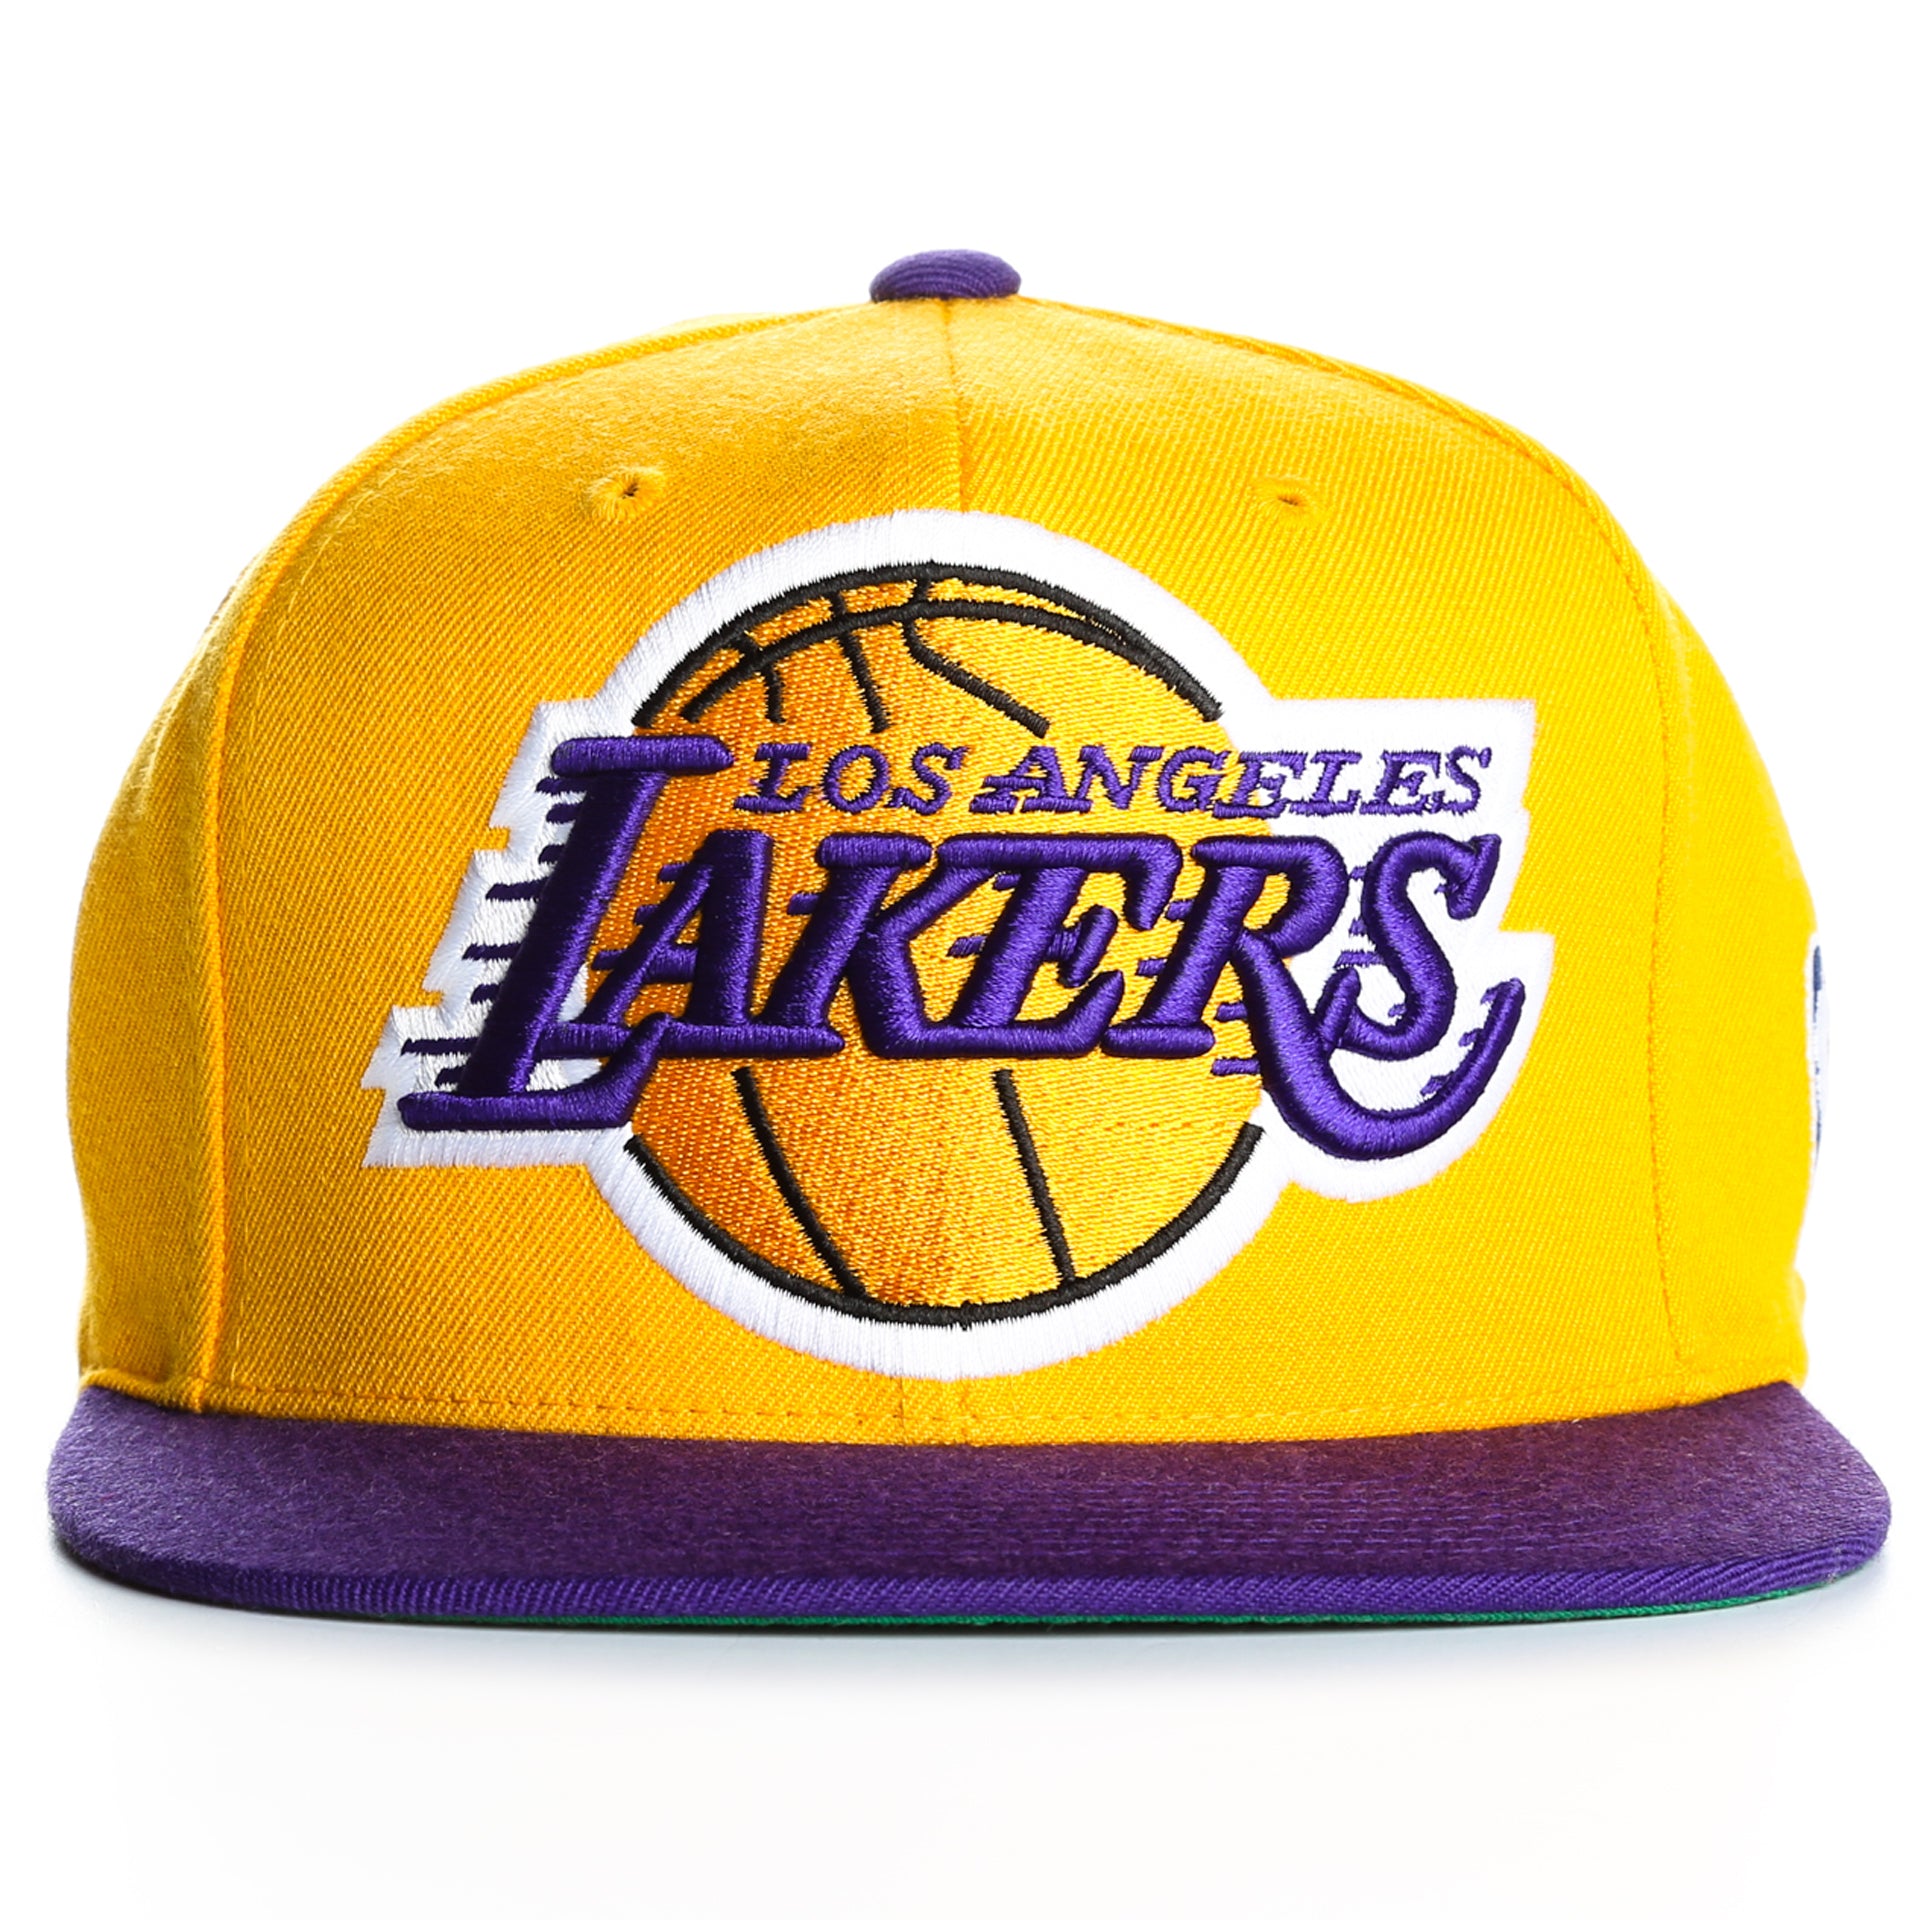 Mitchell & Ness Lakers Snapback Hat